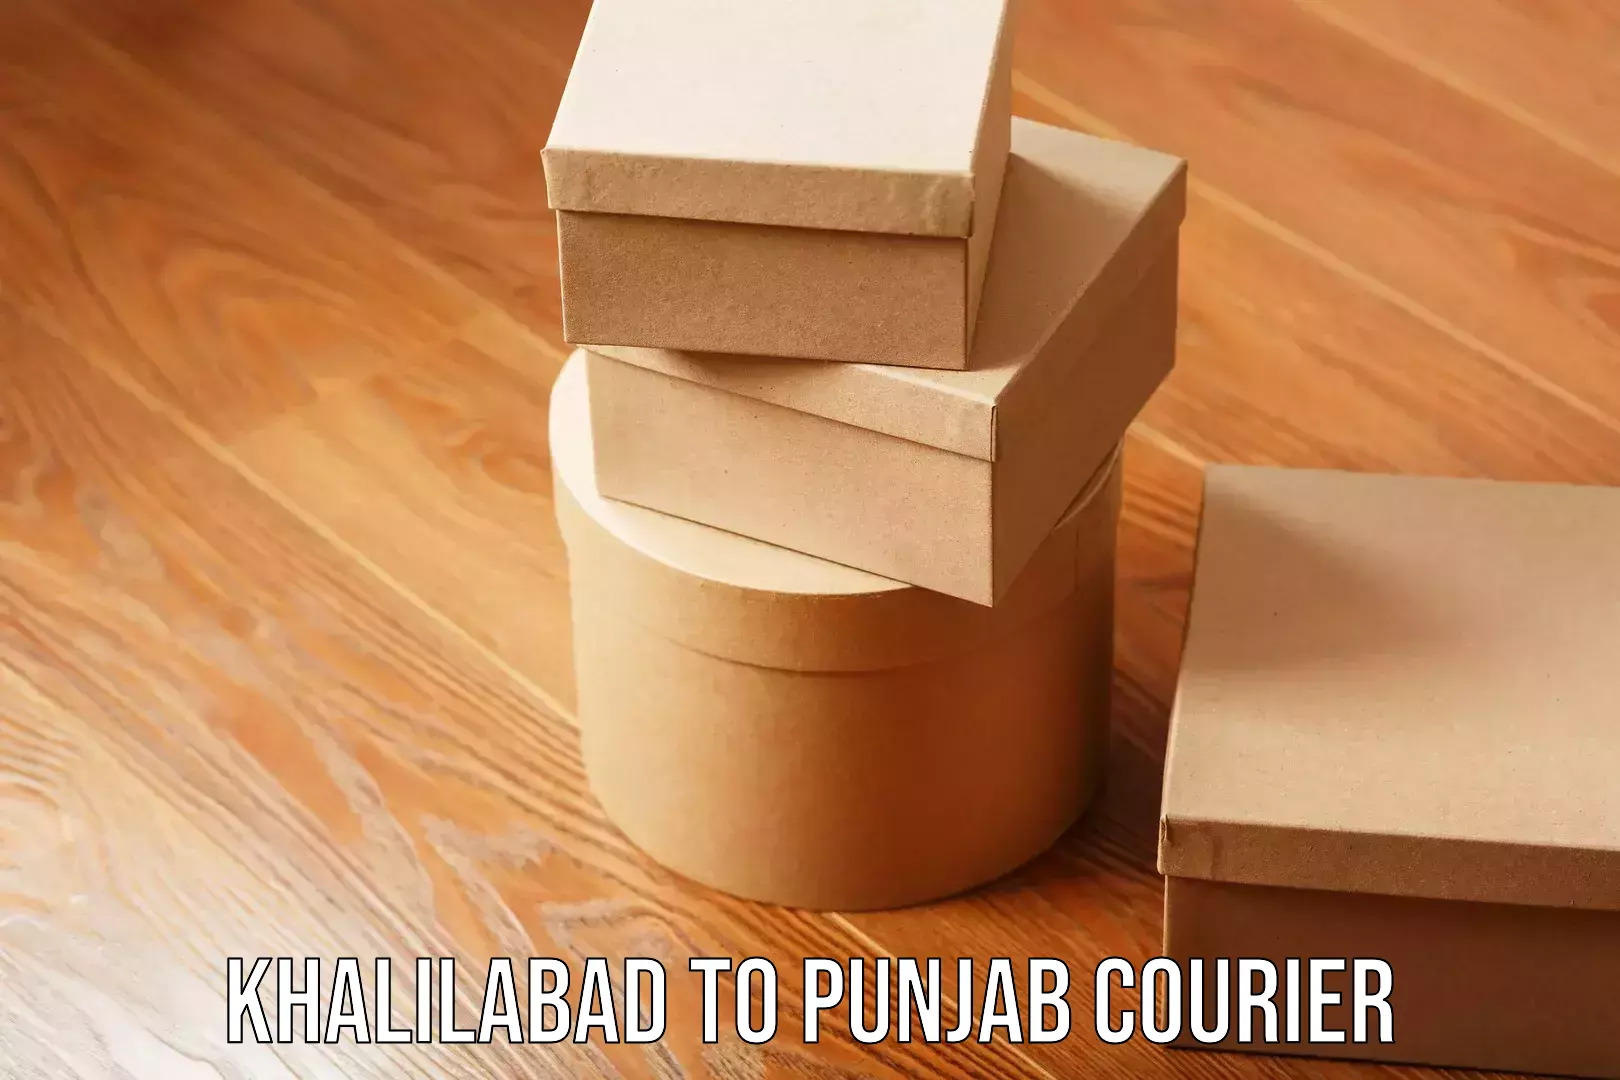 Cost-effective moving options Khalilabad to Punjab